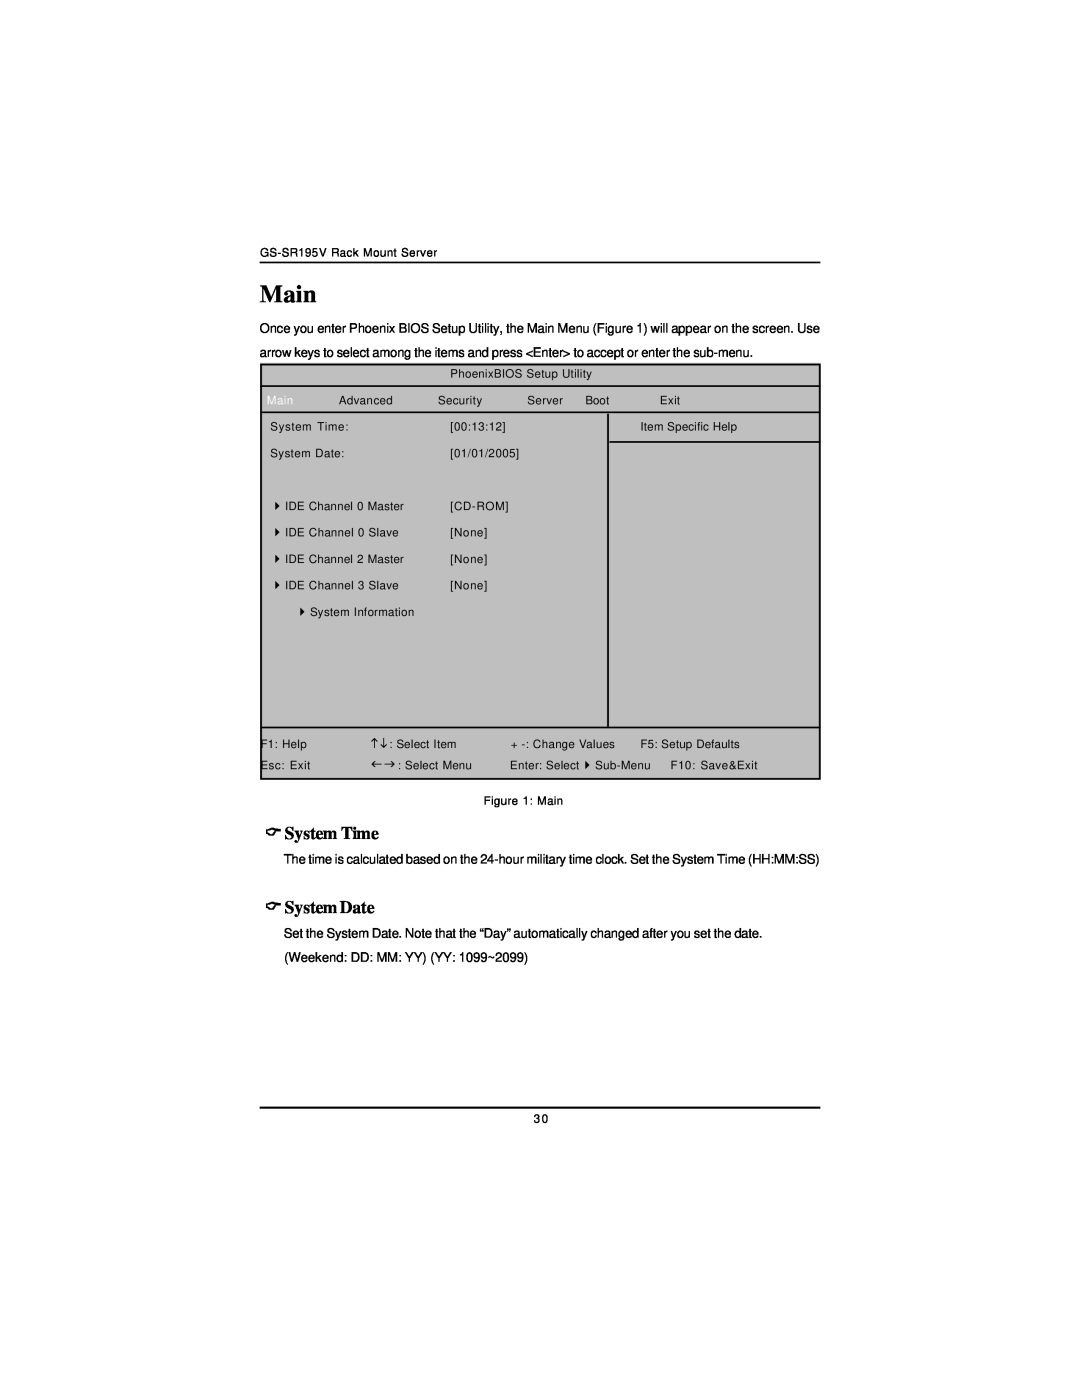 Intel GS-SR195V manual Main, System Time, System Date 